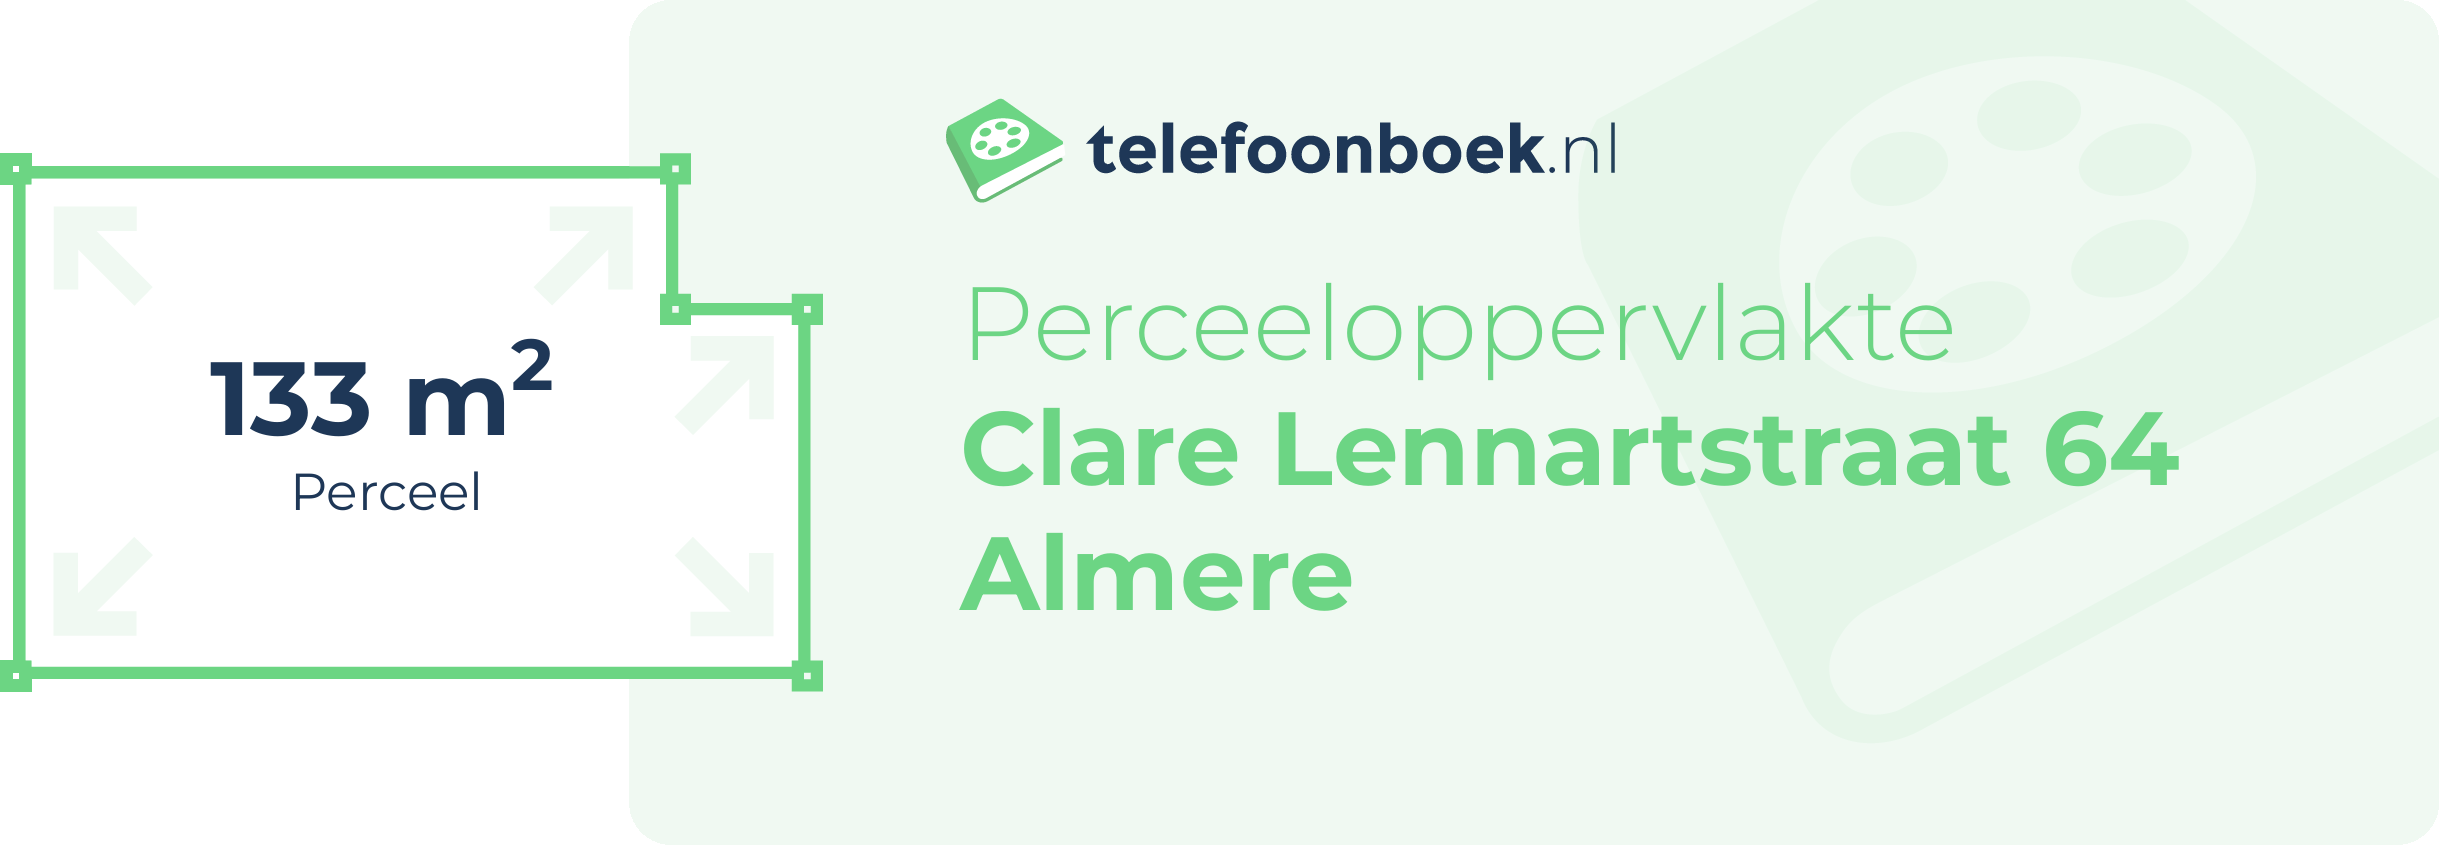 Perceeloppervlakte Clare Lennartstraat 64 Almere